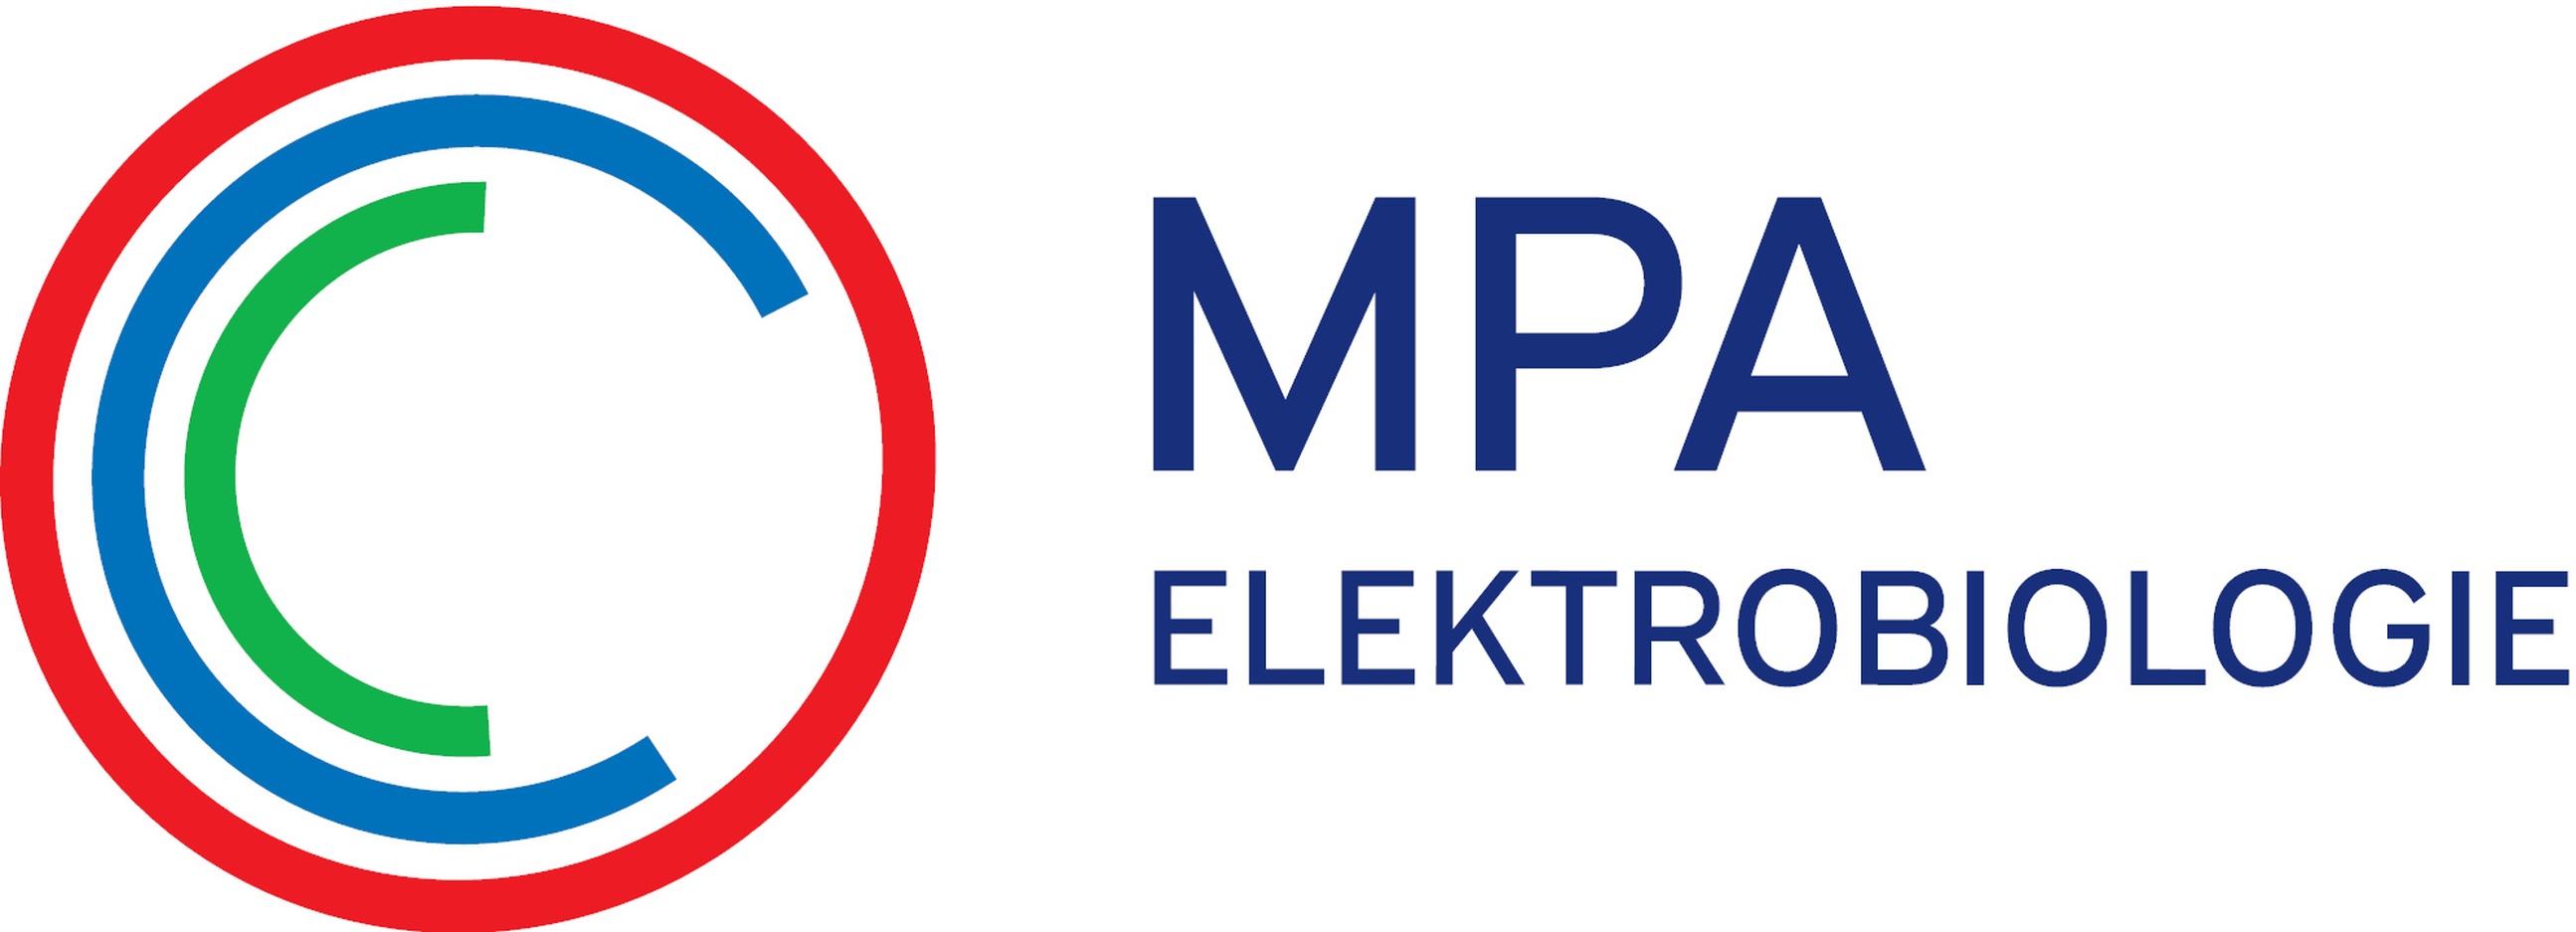 Logo MPA Elektrobiologie